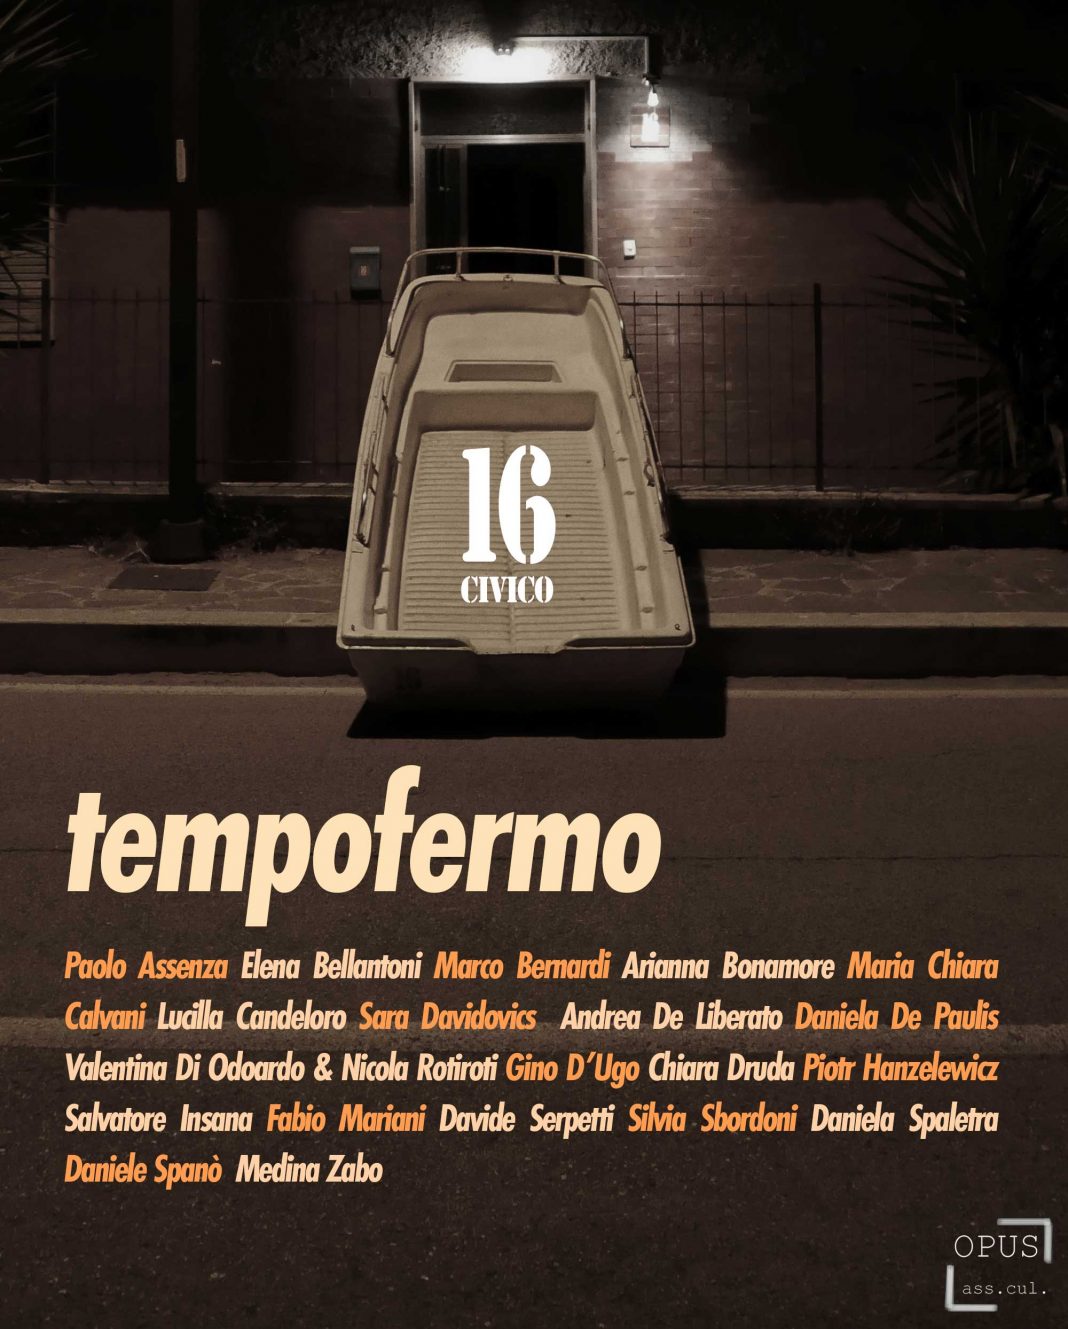 Tempofermo (evento online)https://www.exibart.com/repository/media/formidable/11/TEMPOFERMO-locandina-1-1068x1329.jpg